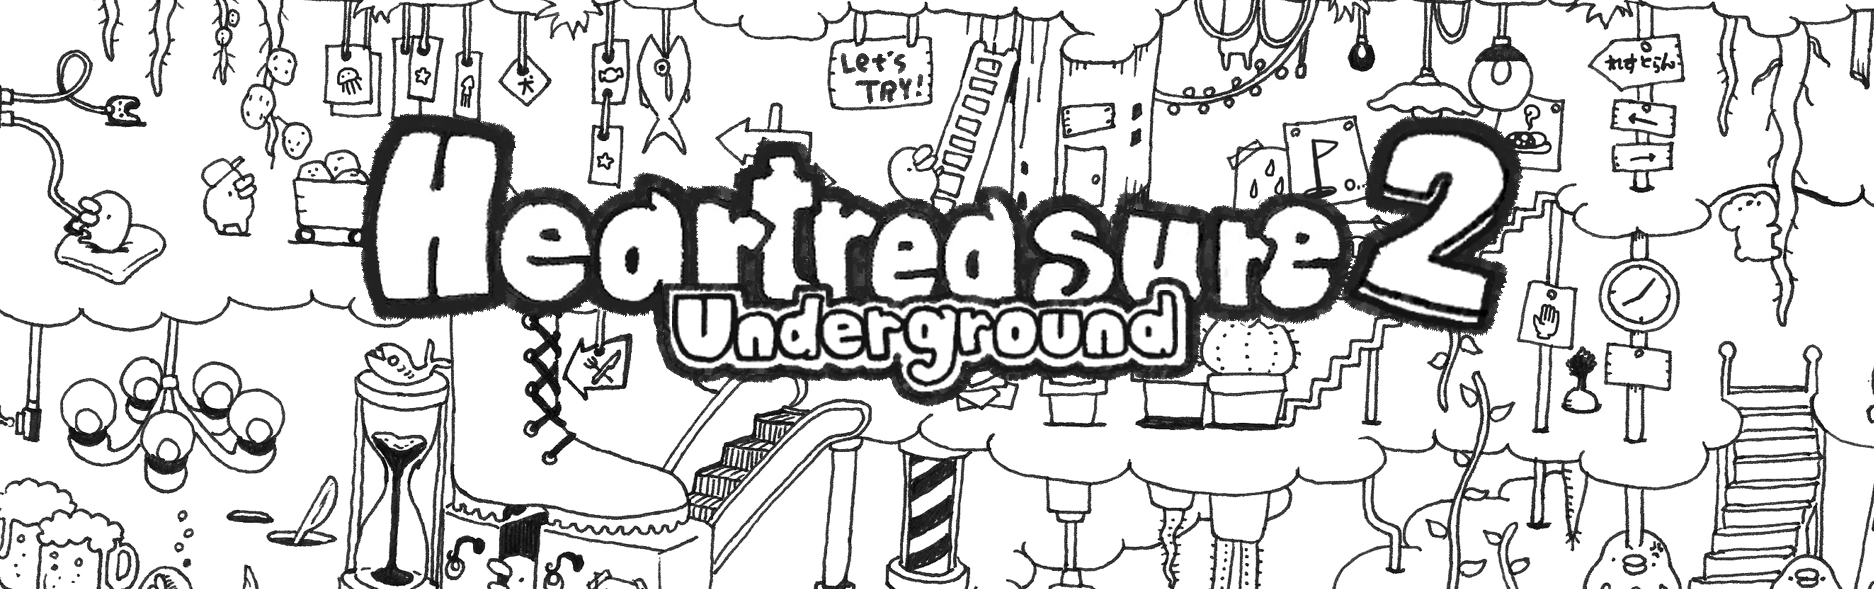 Heartreasure2: Underground